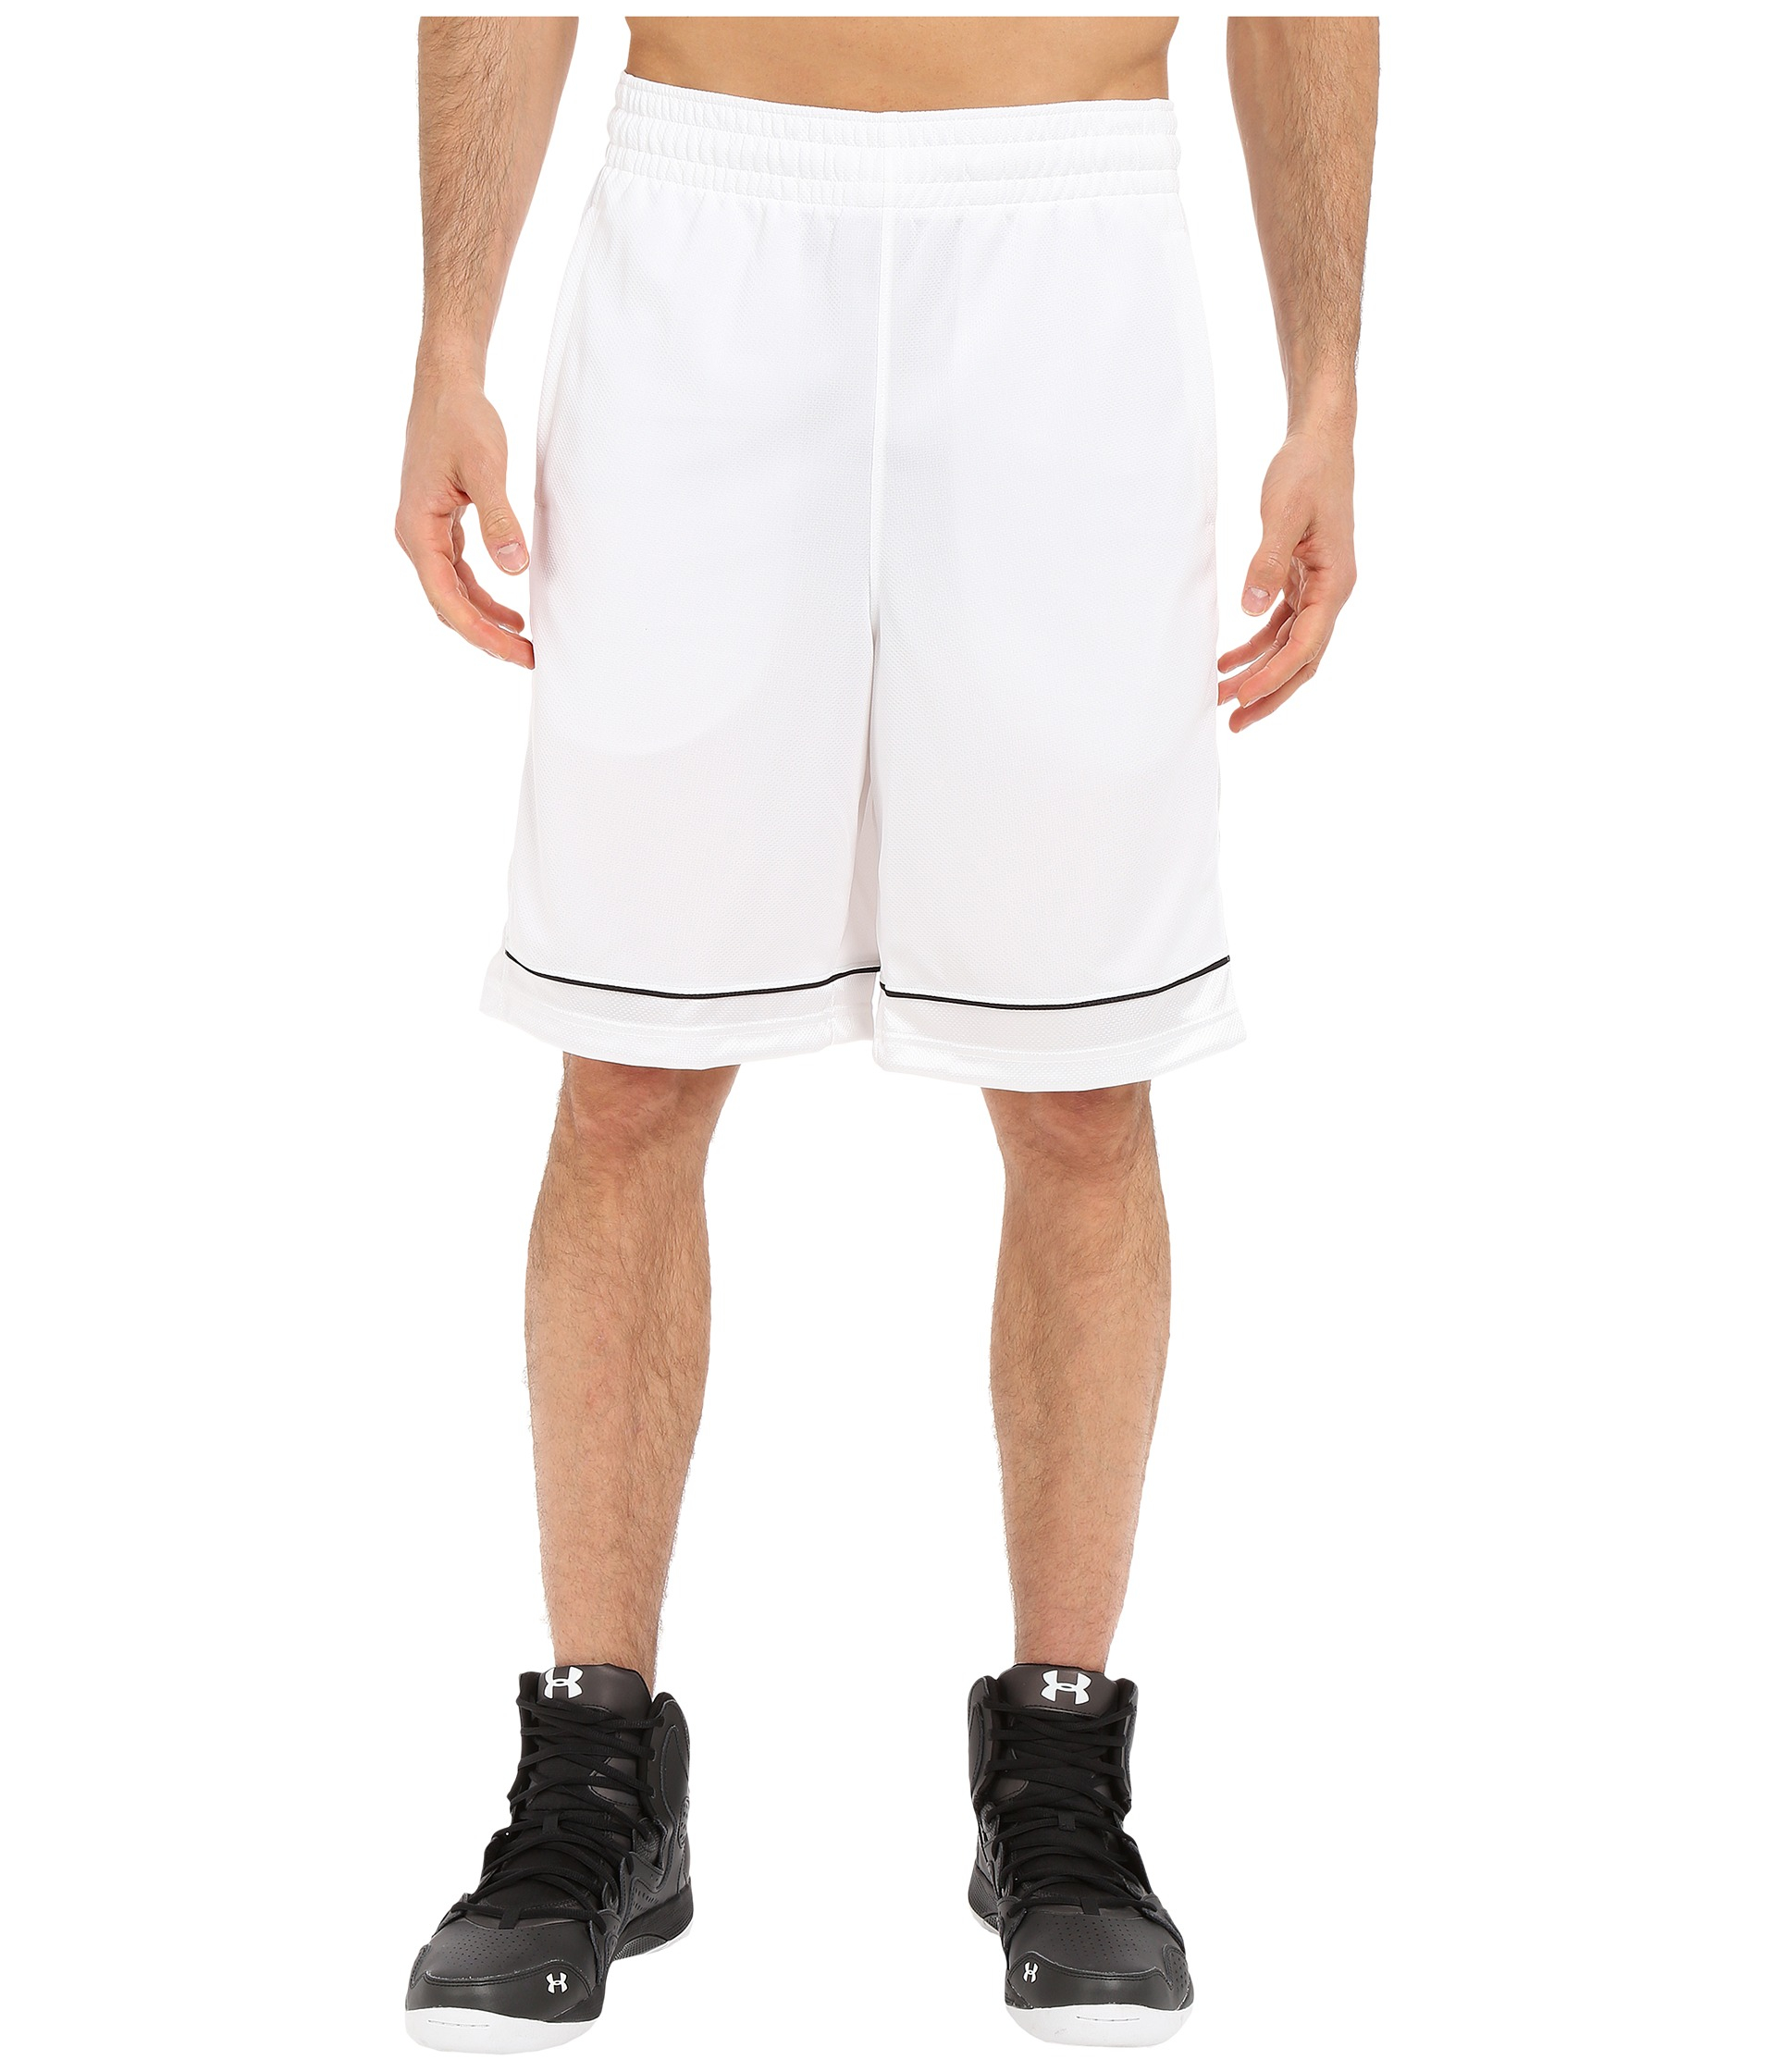 Lyst - Under armour Ua Baseline Basketball Shorts in White for Men